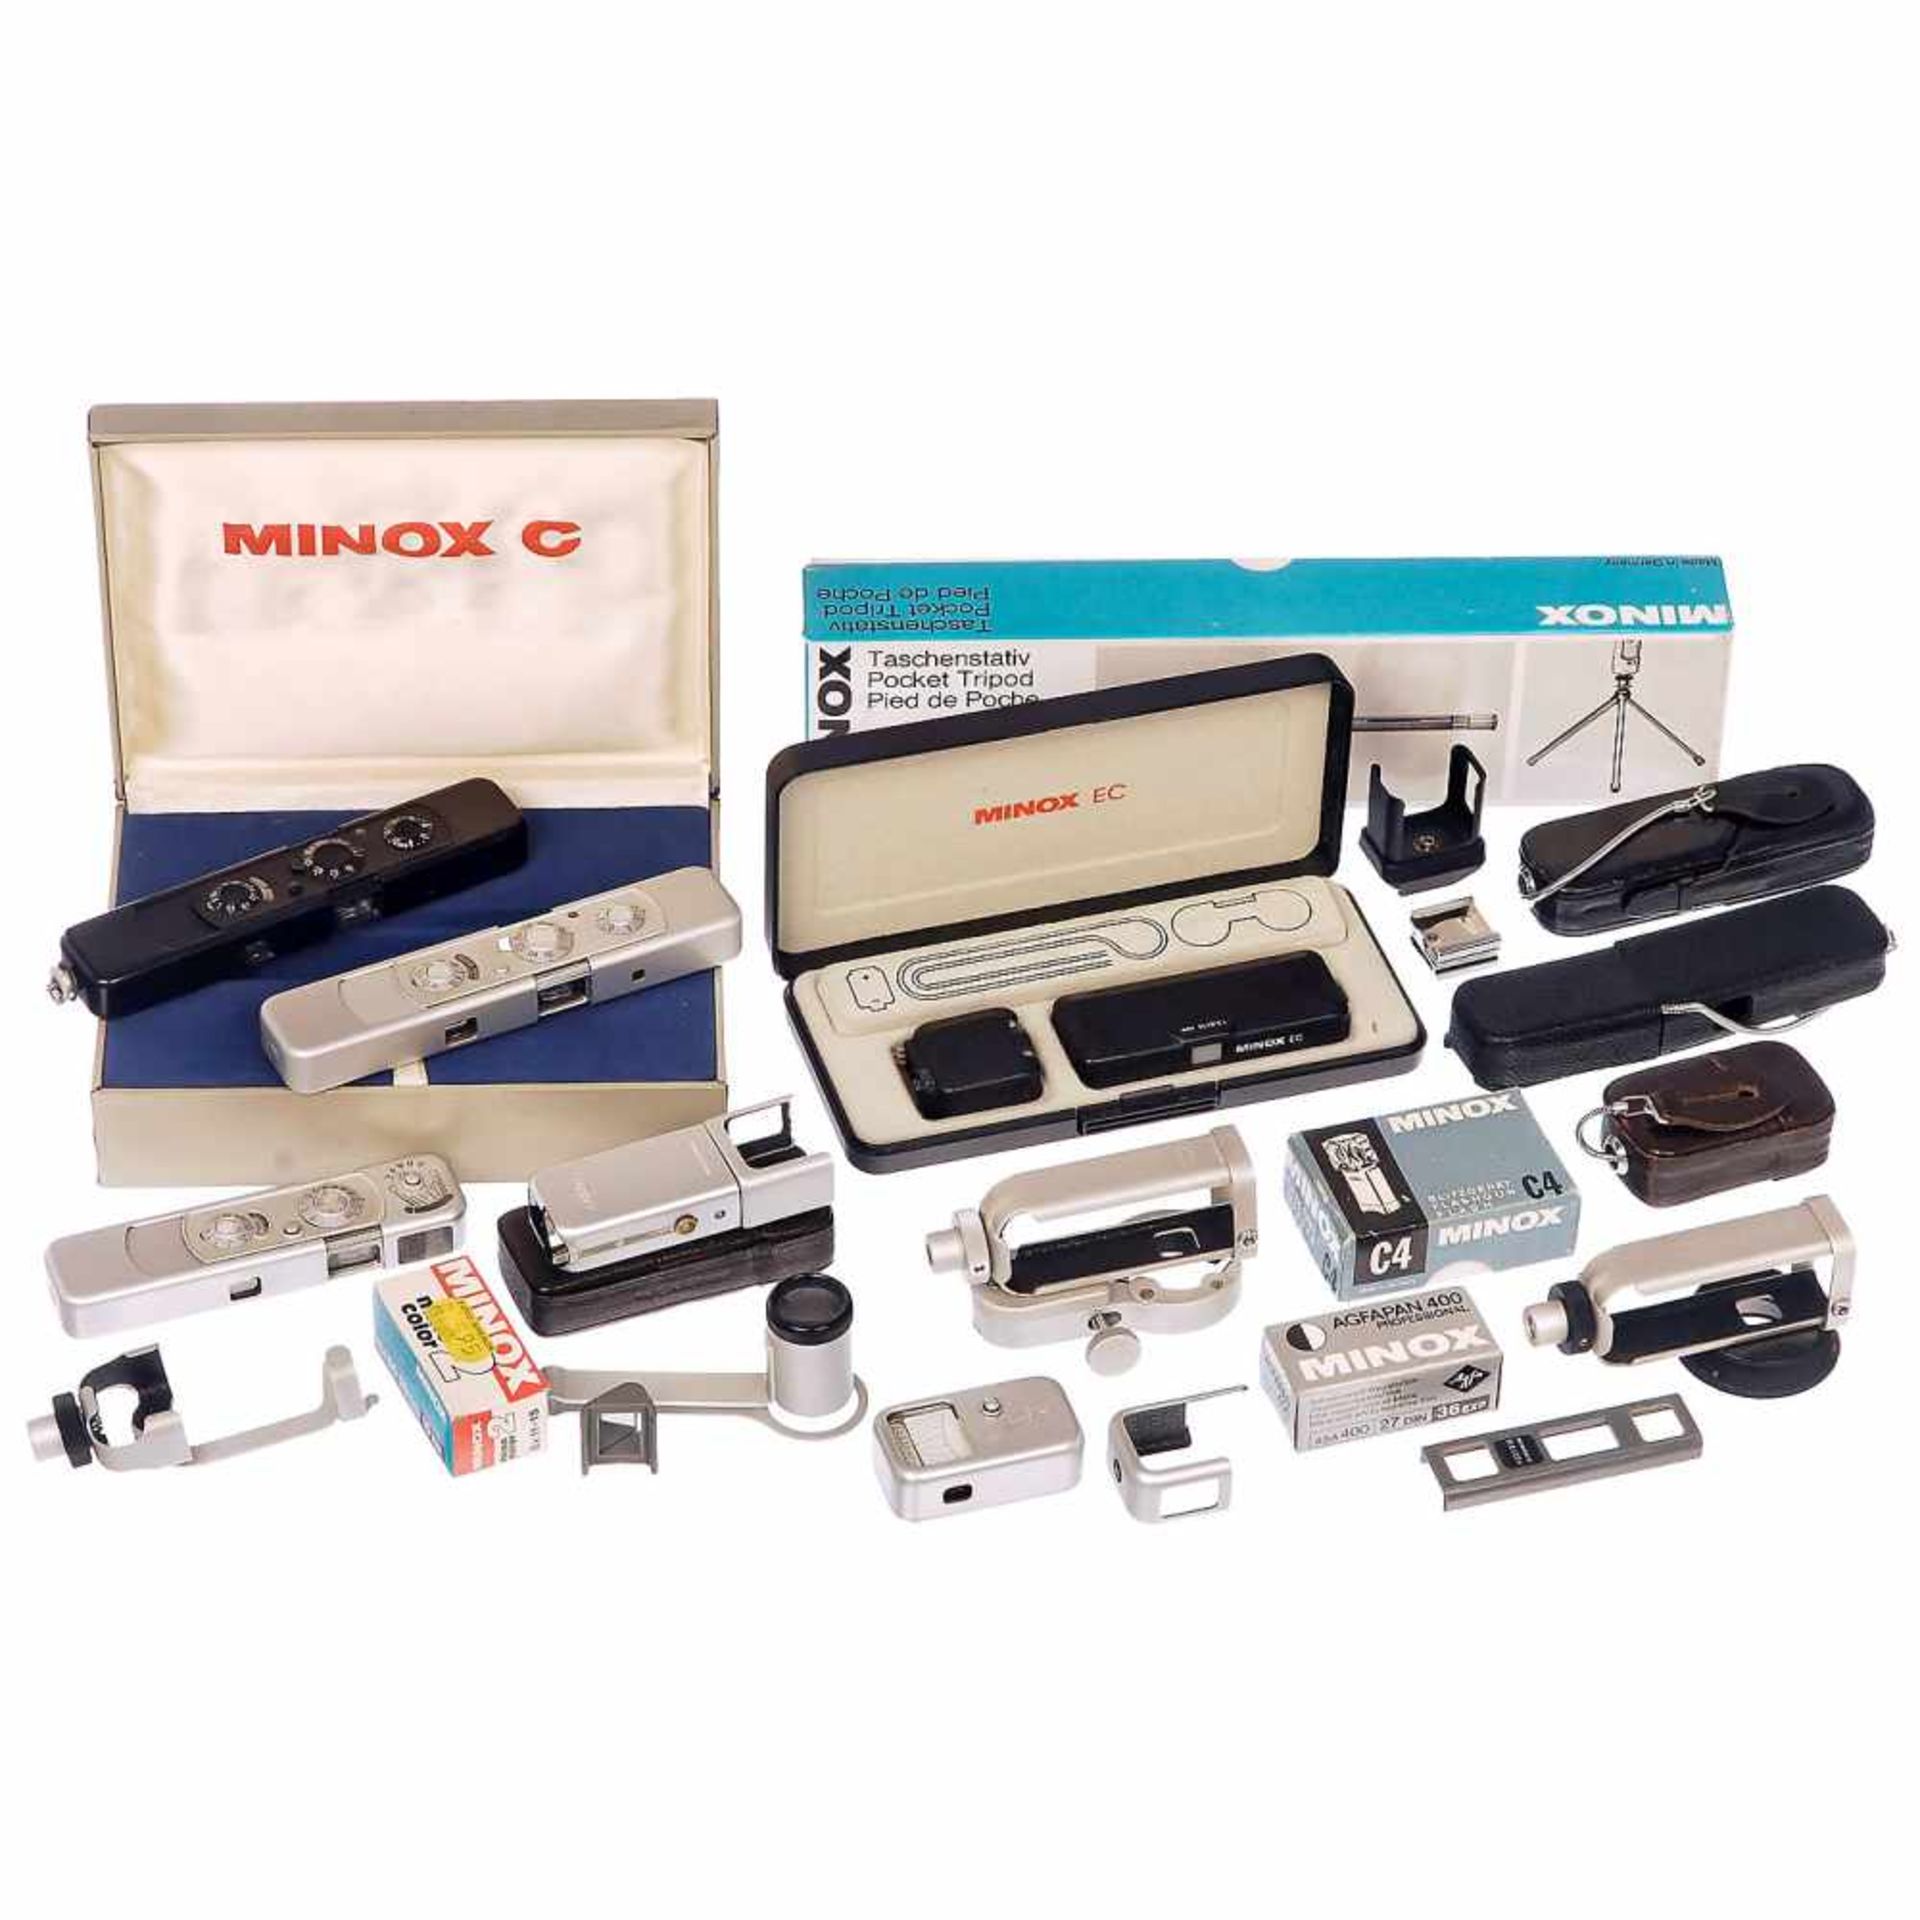 Lot of Minox Cameras and Accessories1) Minox C (black), no. 2389442, with case. – 2) Minox C (